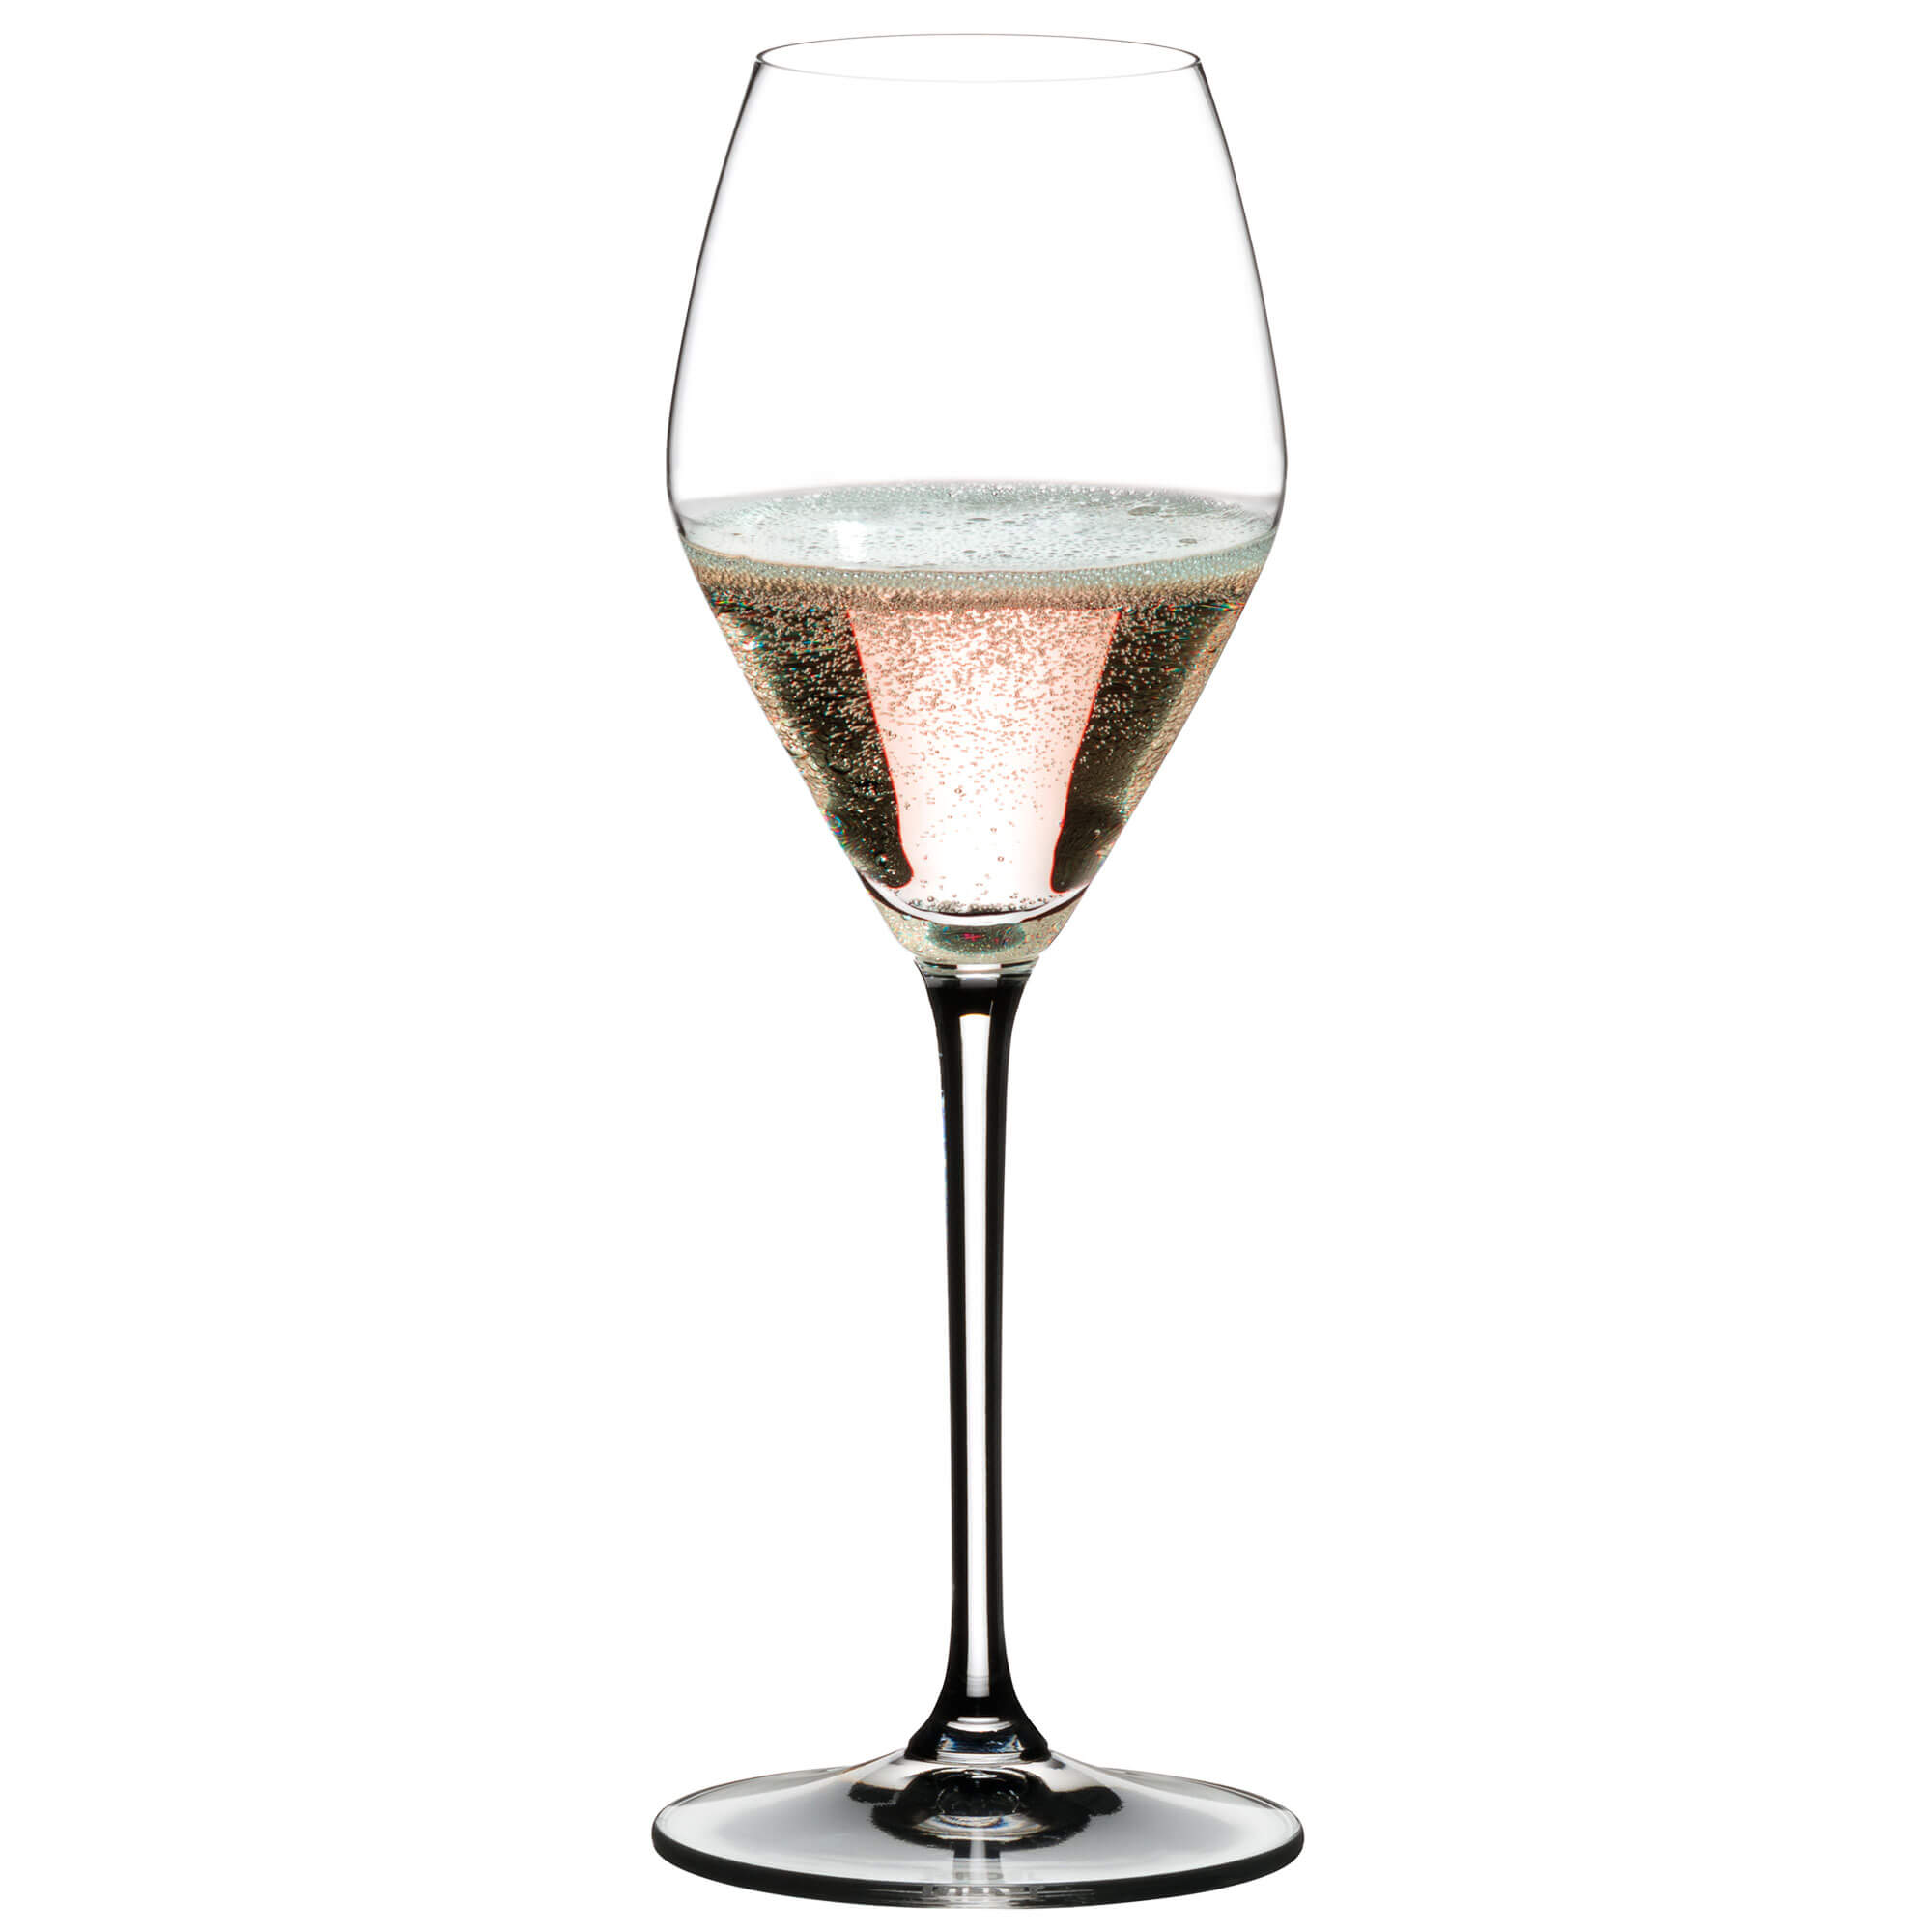 Rosé/Champagne glass Extreme, Riedel - 322ml (2 pcs.)